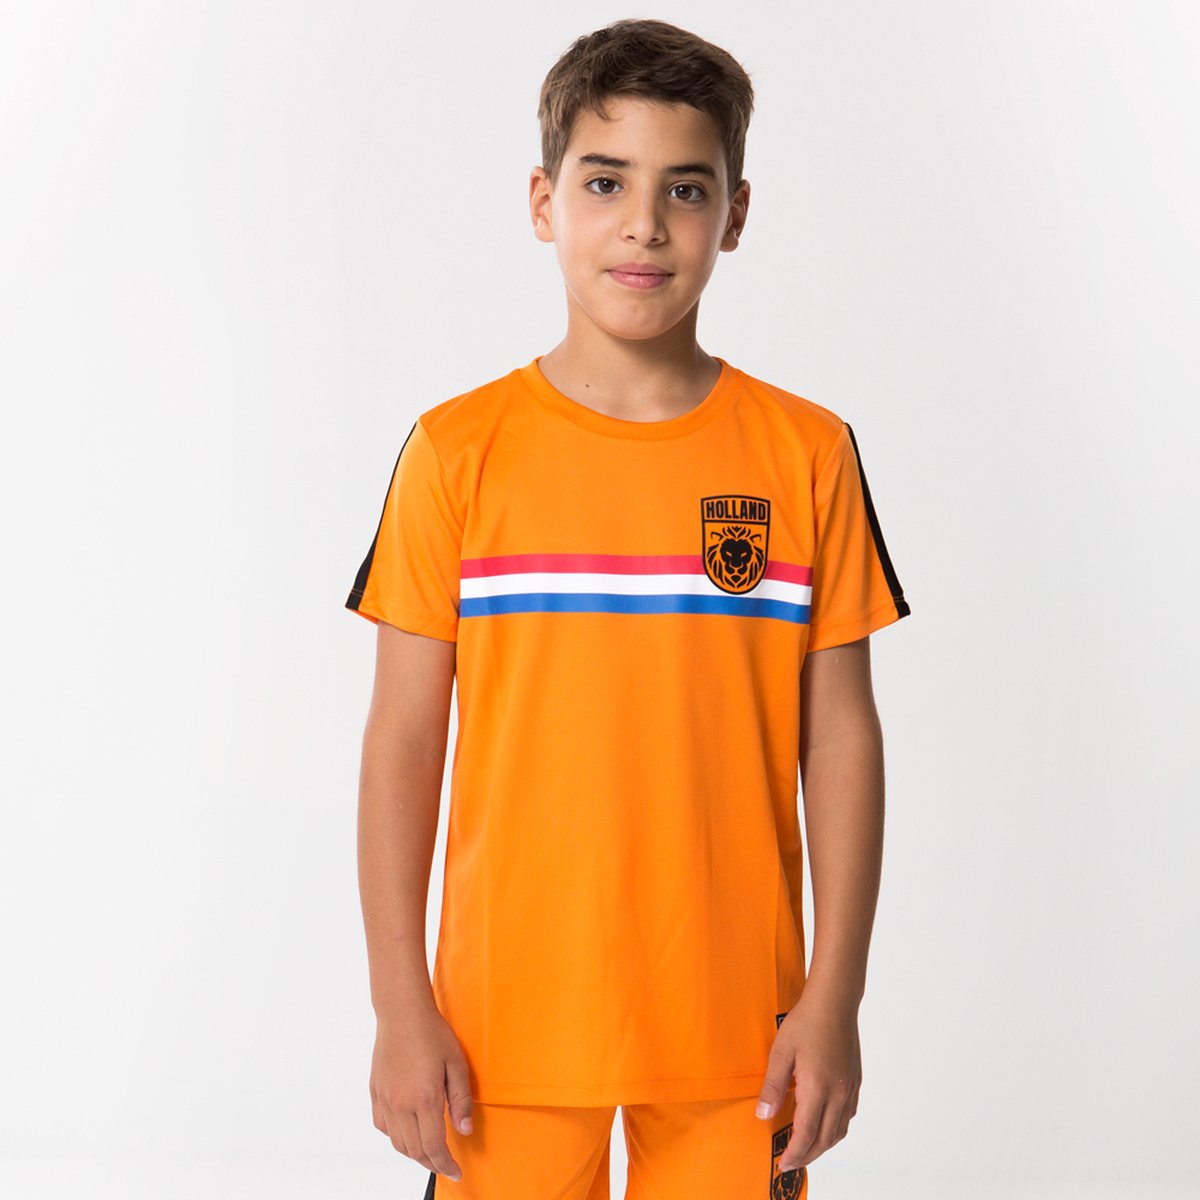 Holland voetbalshirt kids - Sportshirt kinderen - Oranje - maat 140